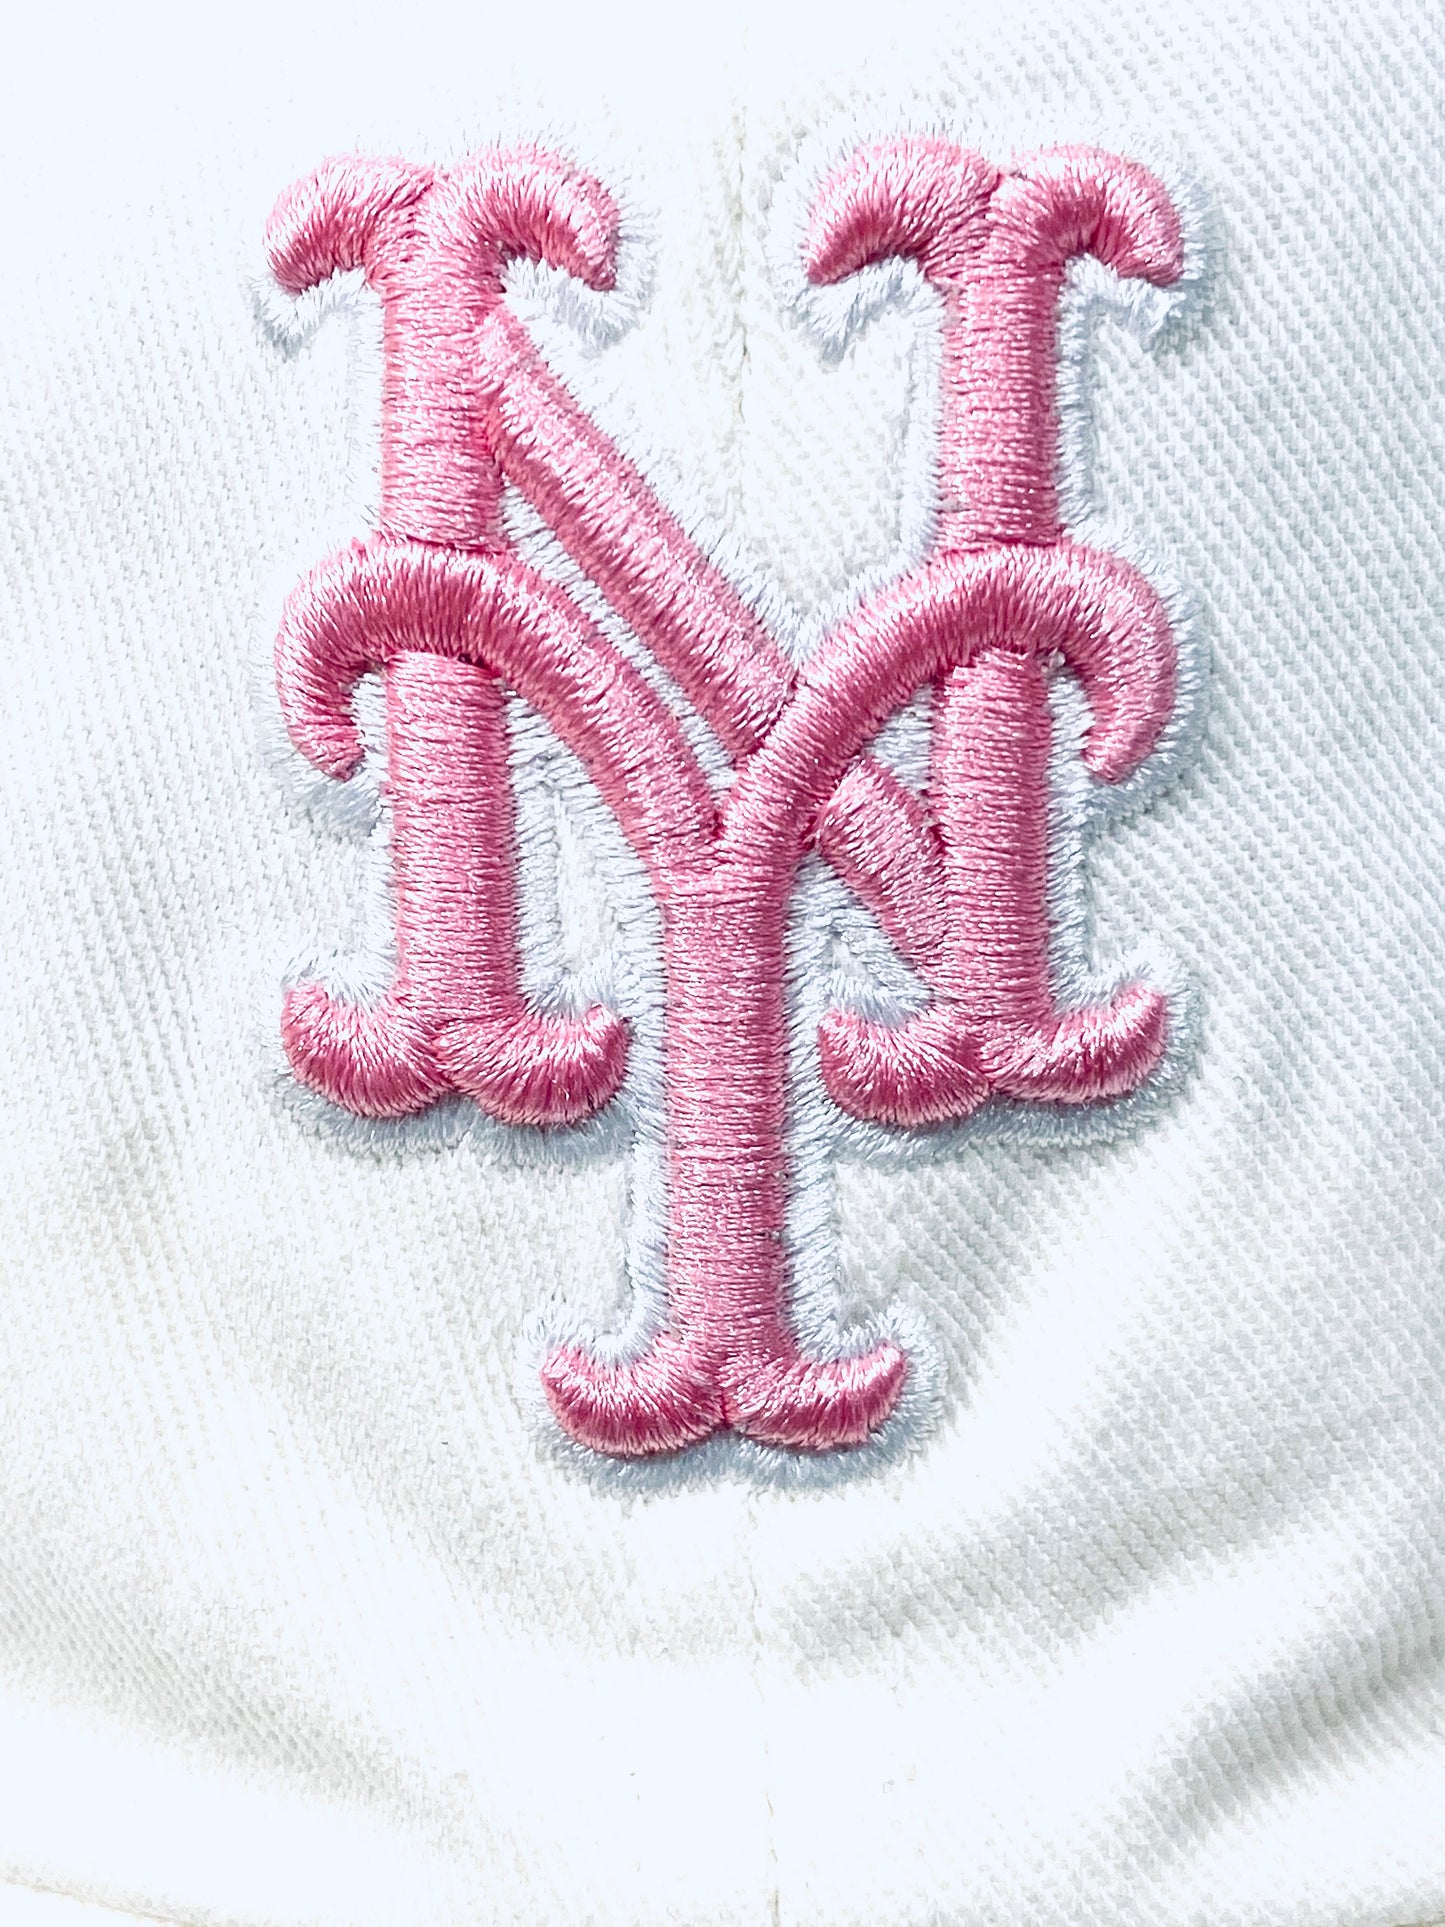 New York Mets Vintage MLB Women's White Logo Cap NOS By Twins Enterprise